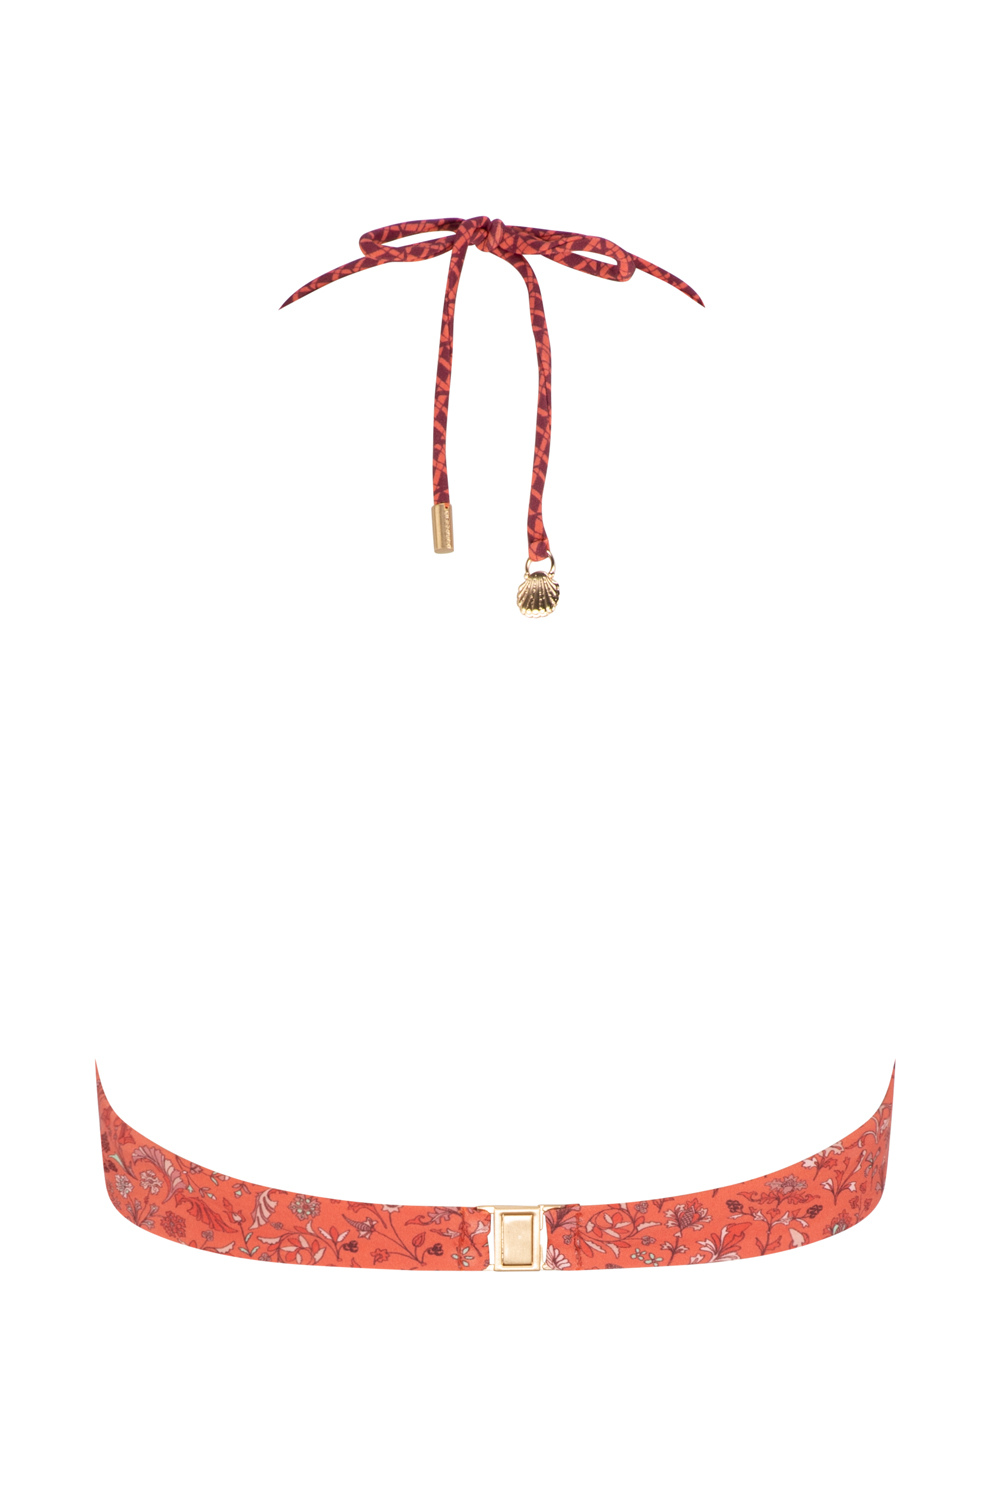 Alexandria Maisy V Neck Tri Bikini Top - Raspberry/Orange Floral